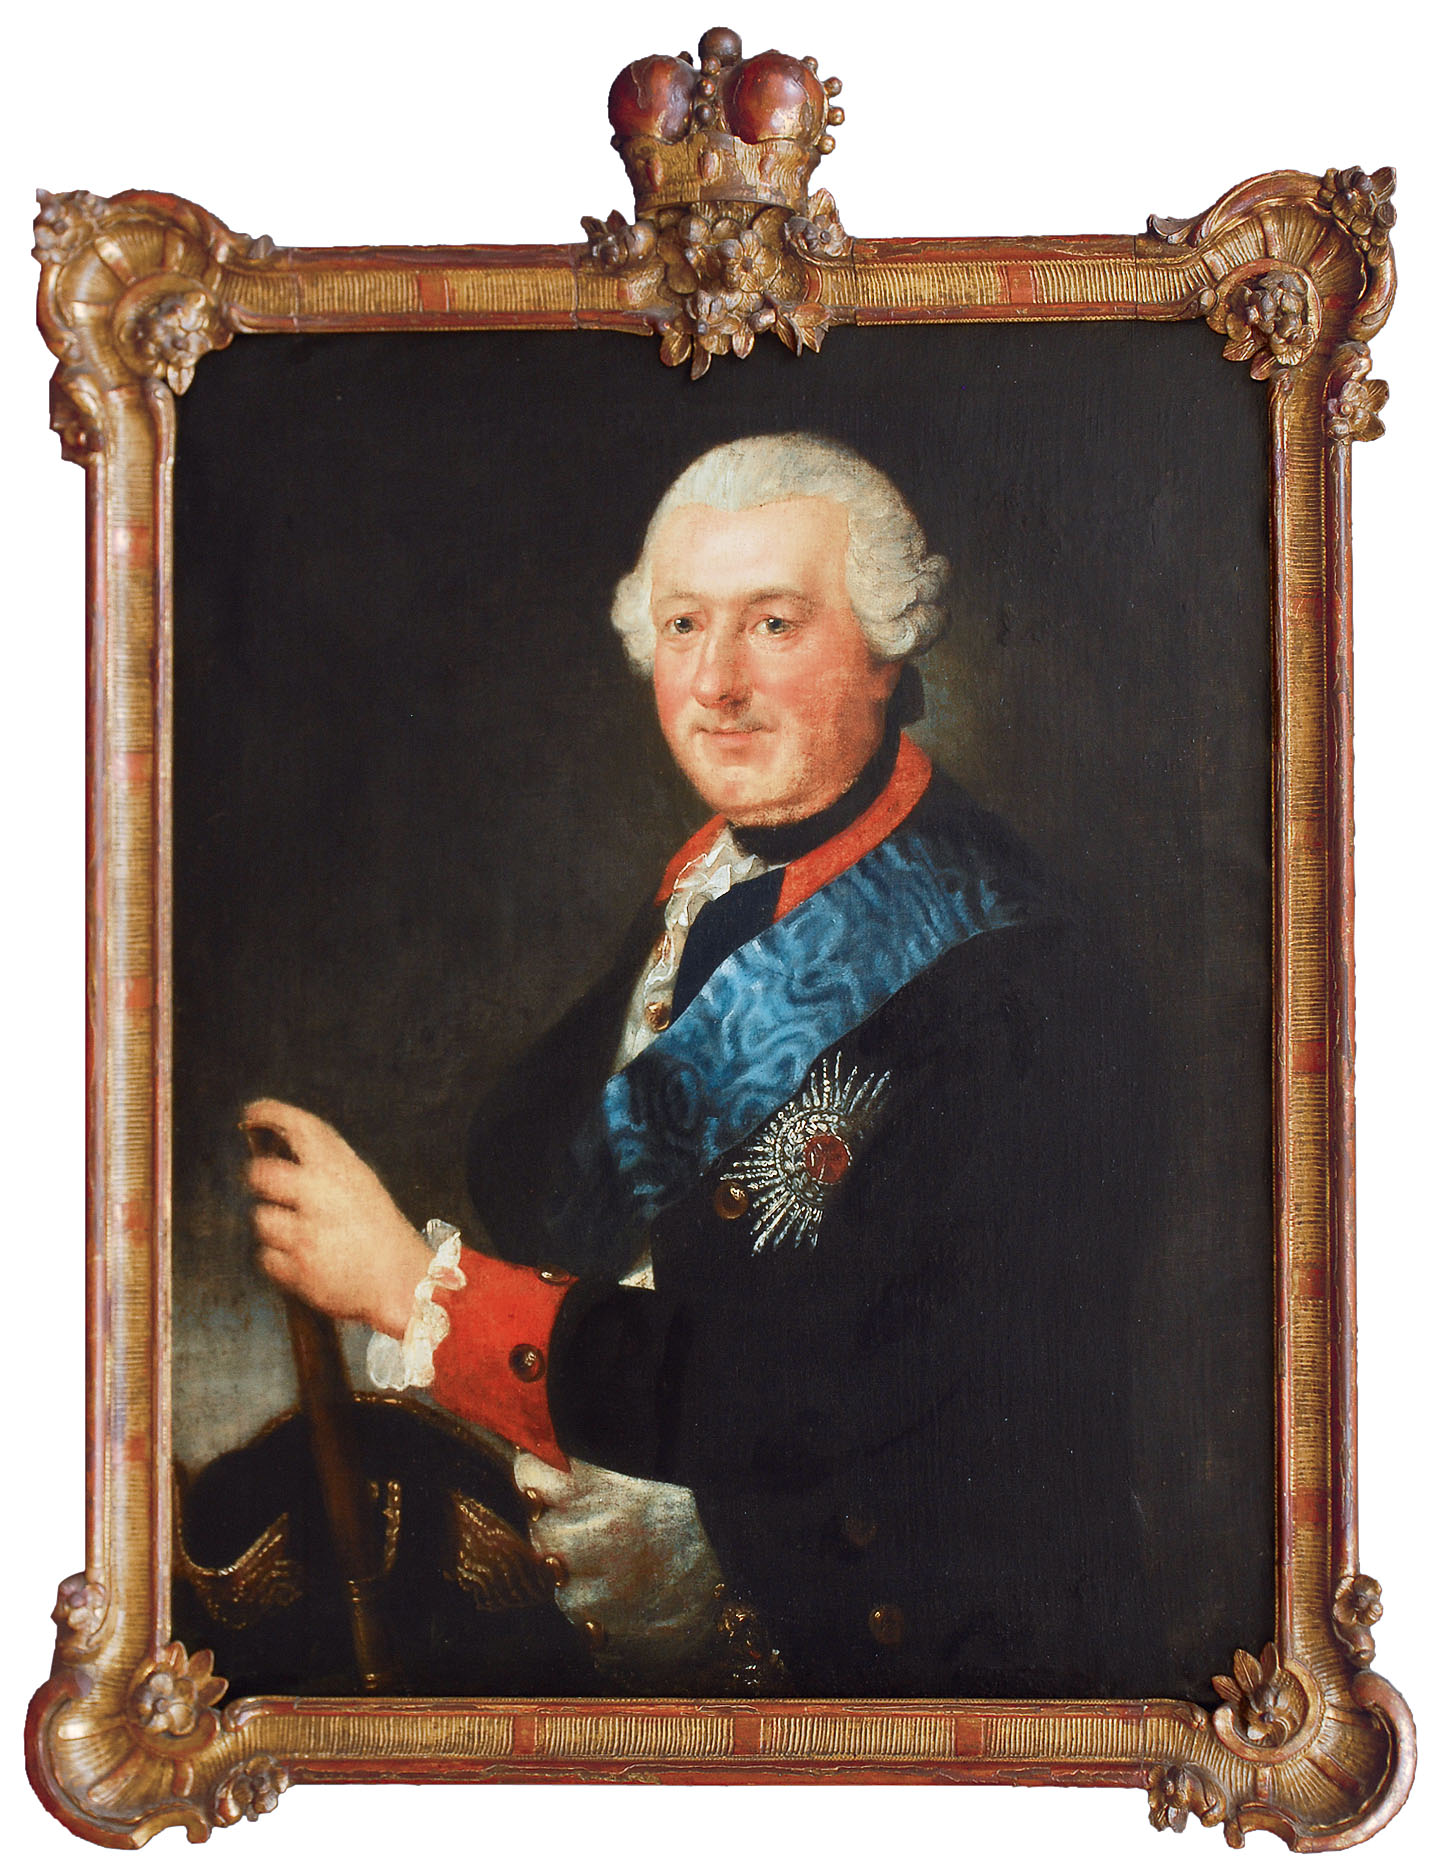 Portrait of a Prussian nobleman